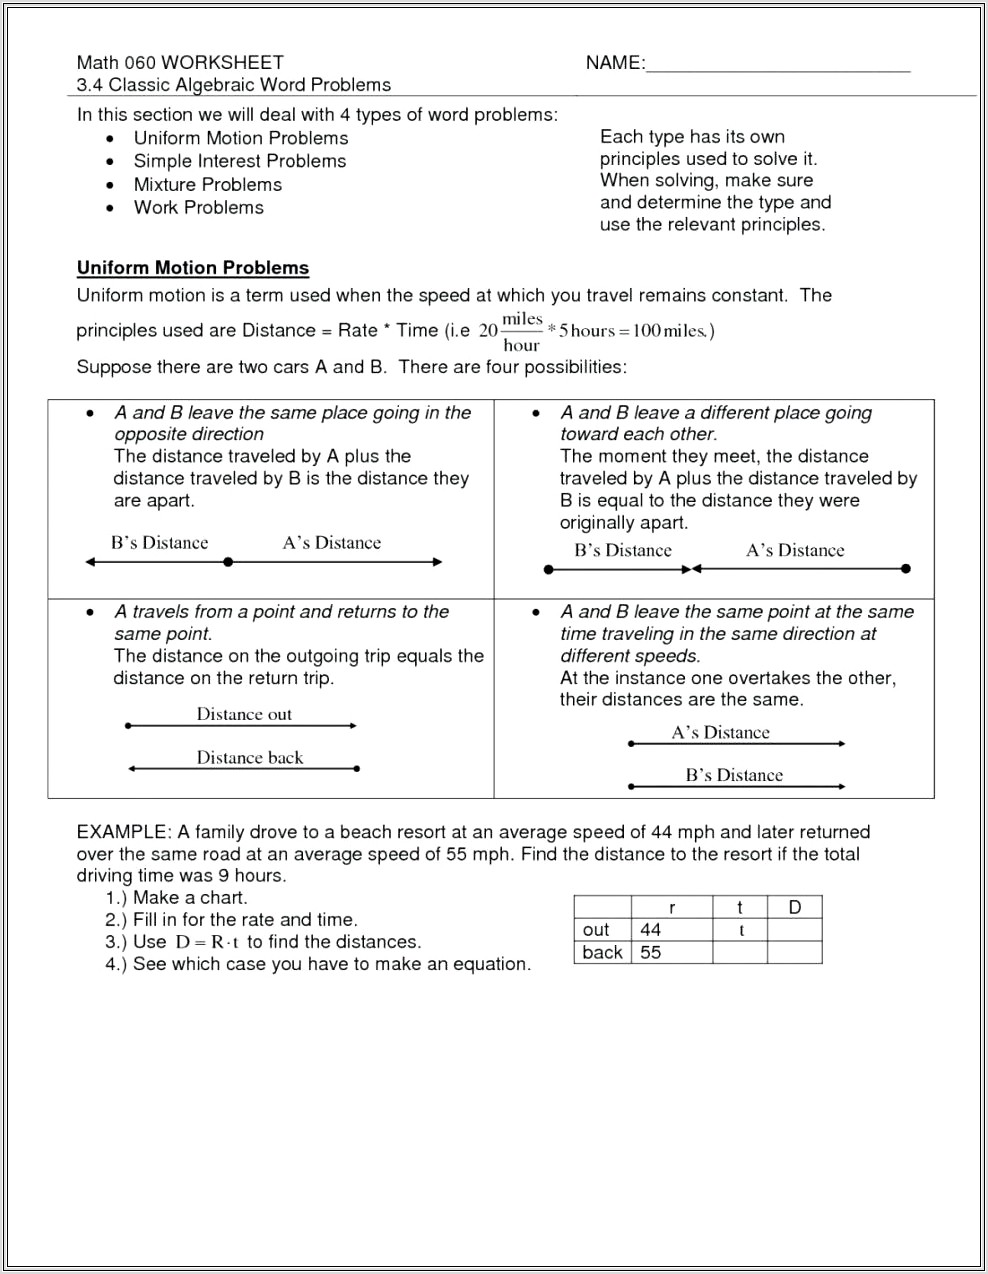 Math Worksheet On Simple Interest